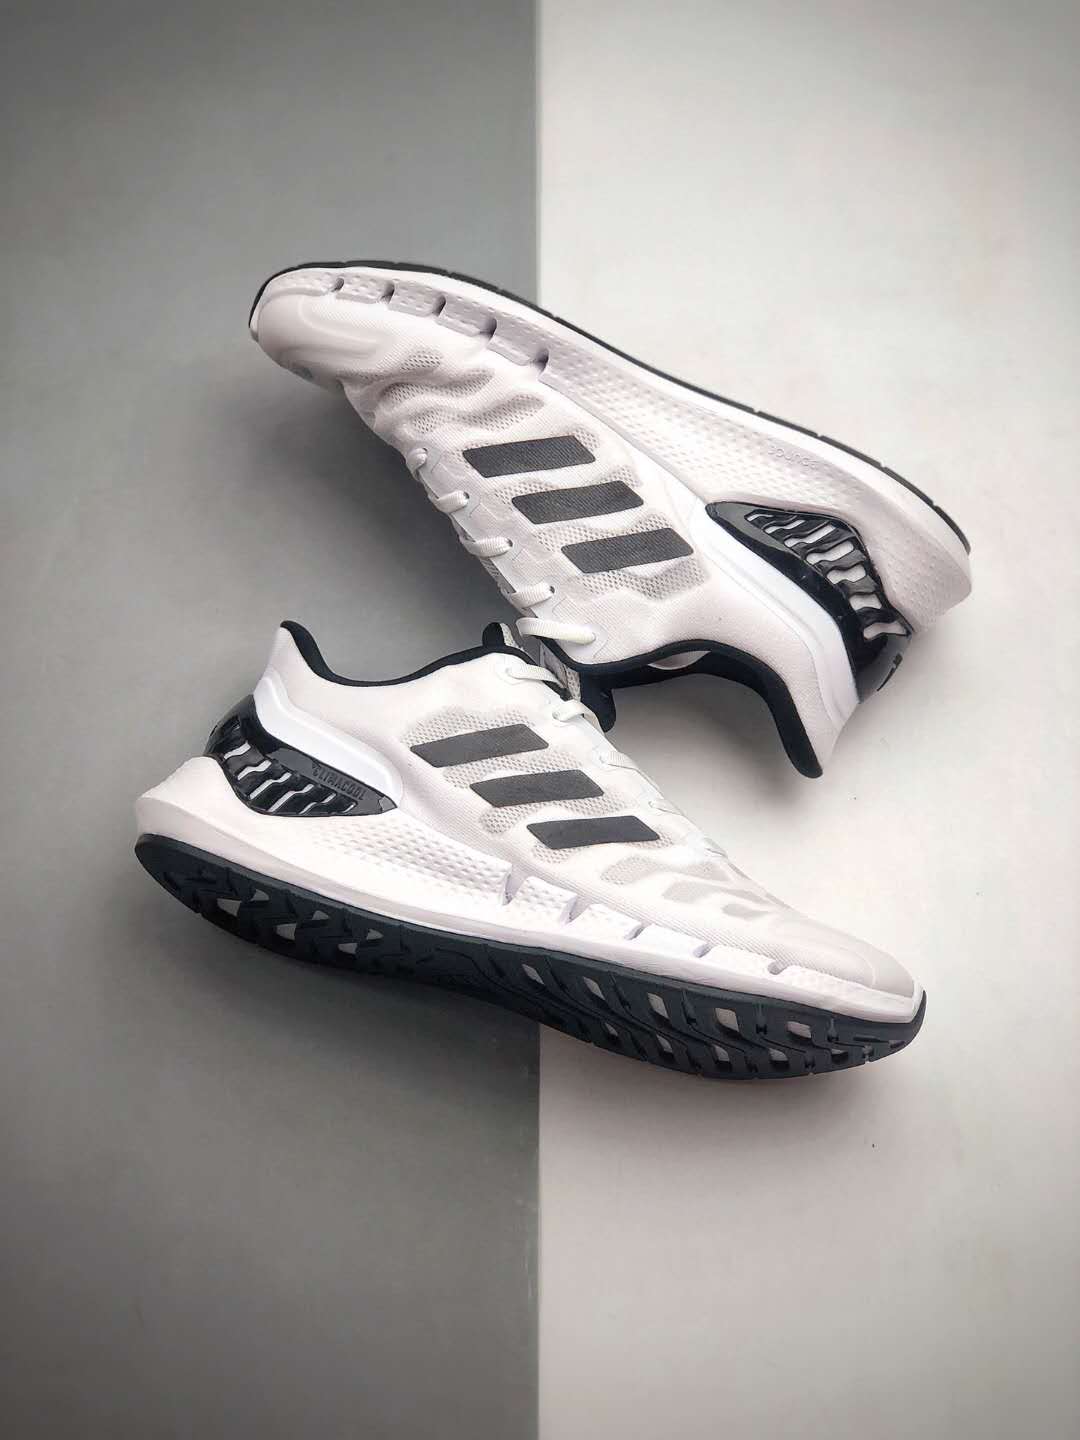 Adidas Climacool White Black FW1221: Lightweight & Stylish Footwear